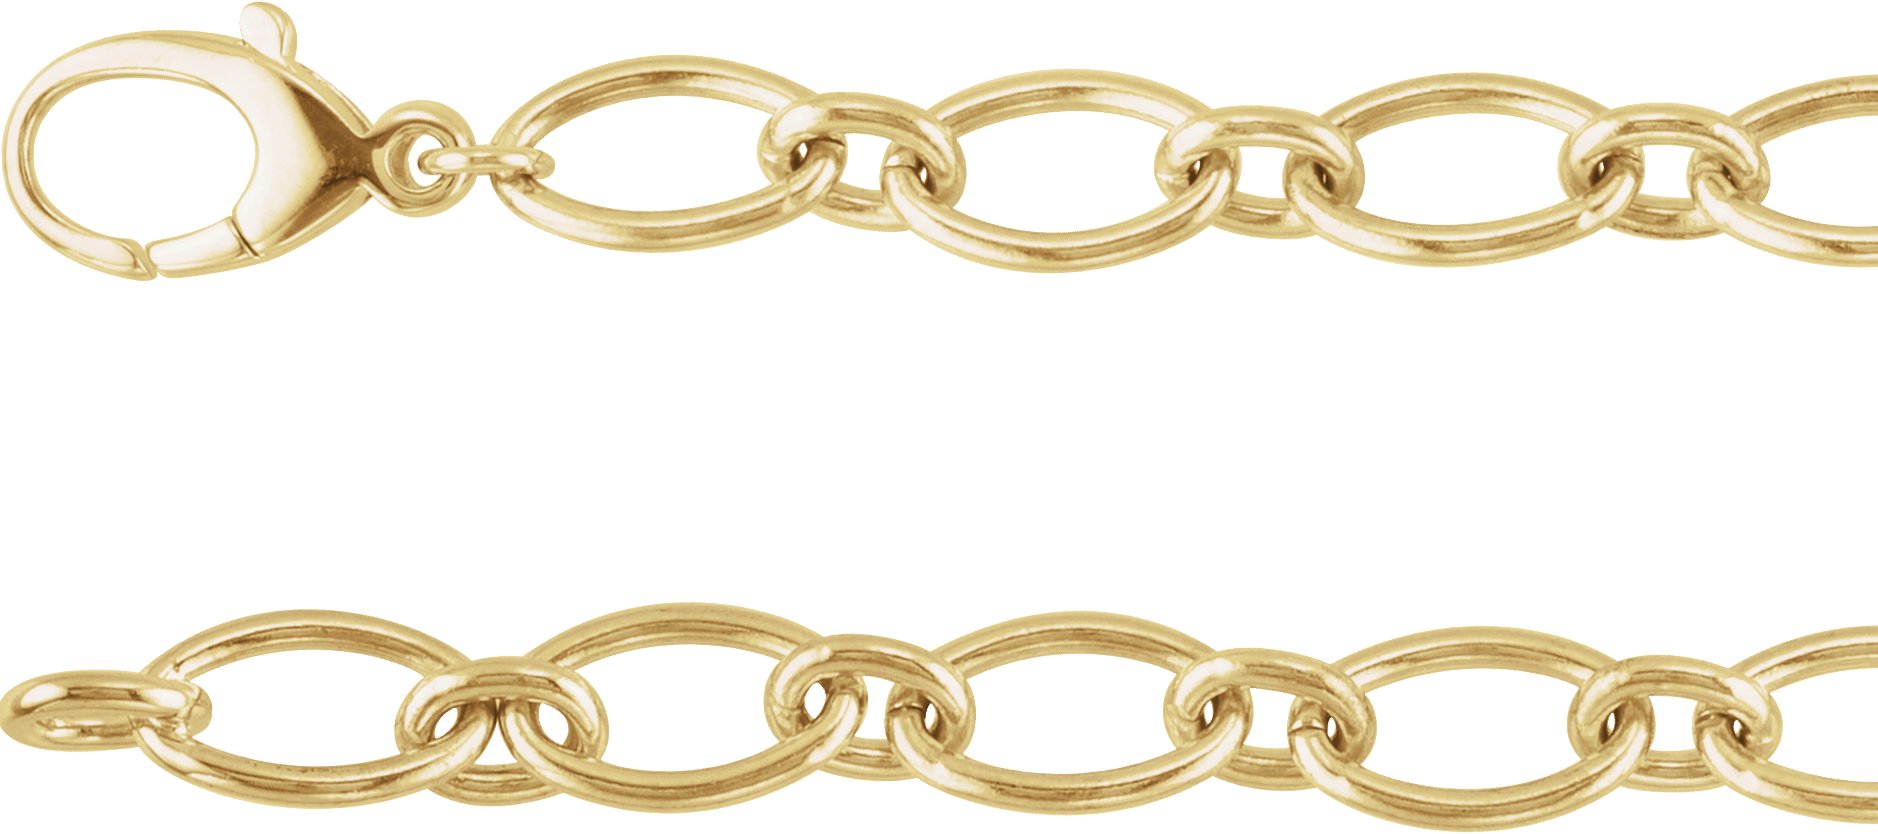 14K Gold Half Paperclip & Half Cable Chain Bracelet